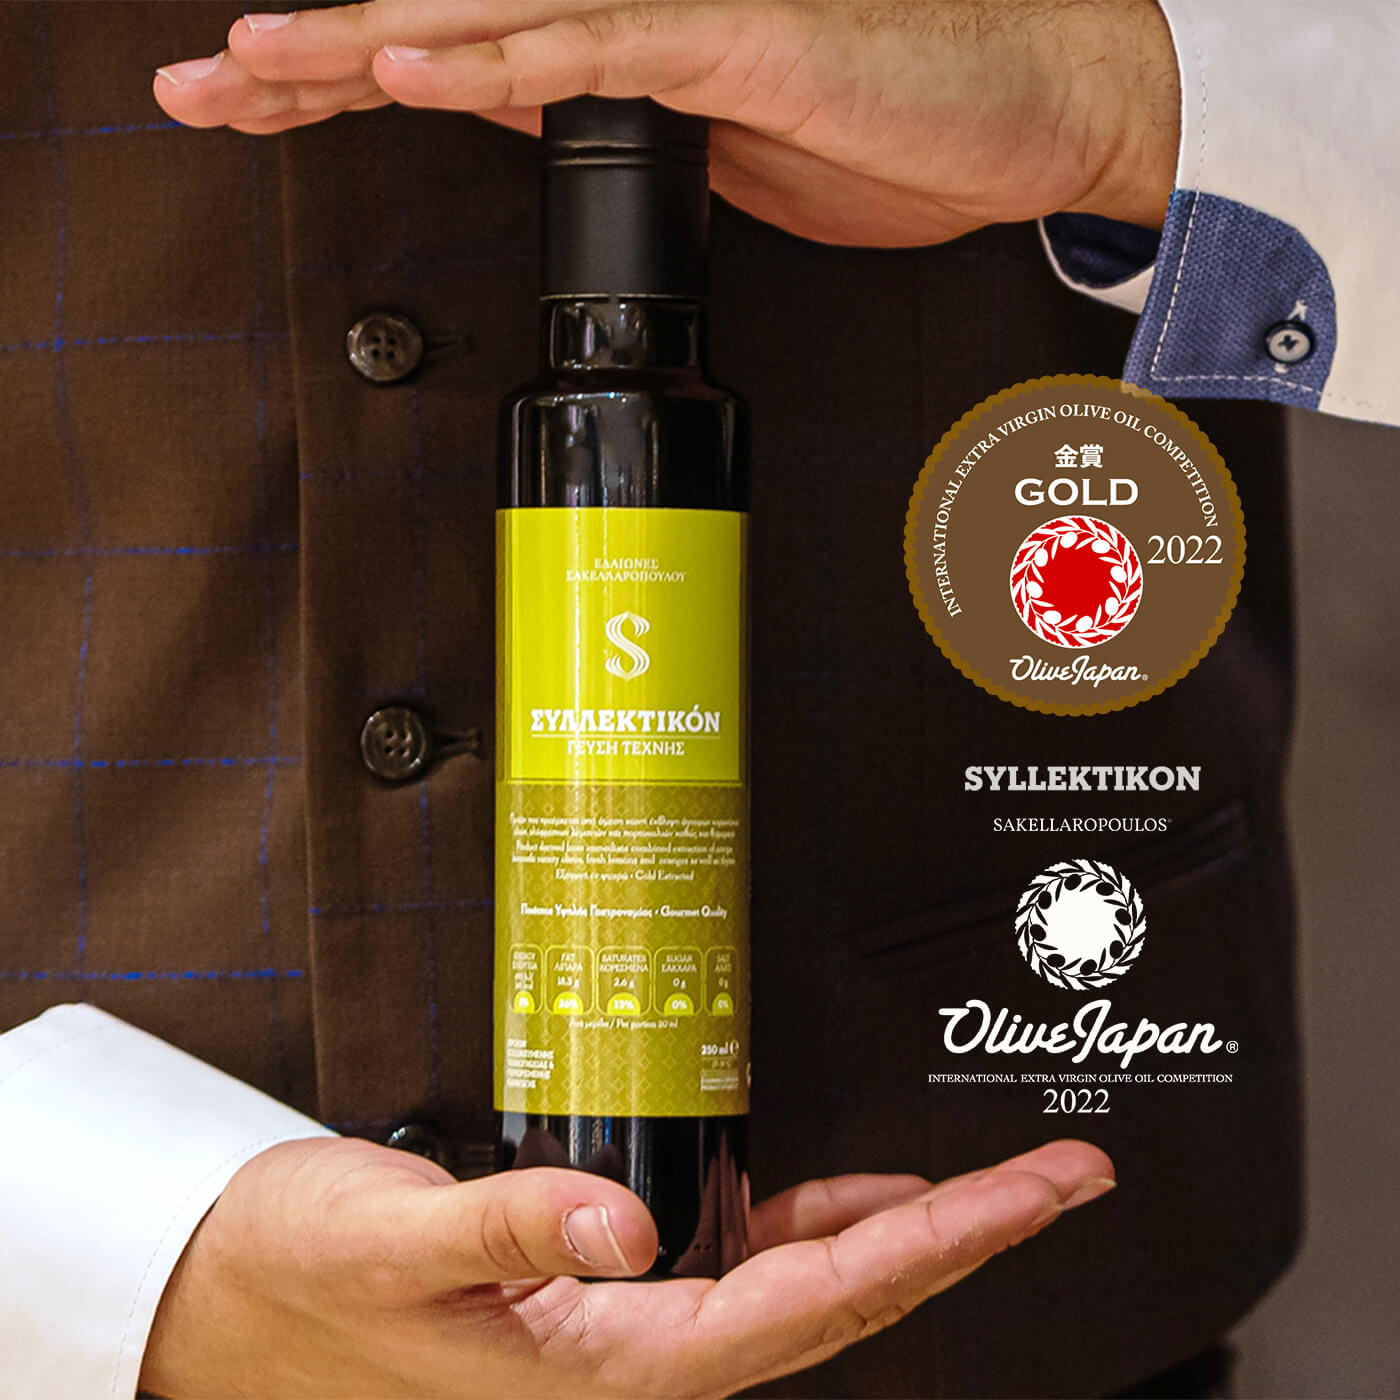 Olive Japan 2022 Flavored Syllektikon Flavored Gold awarded